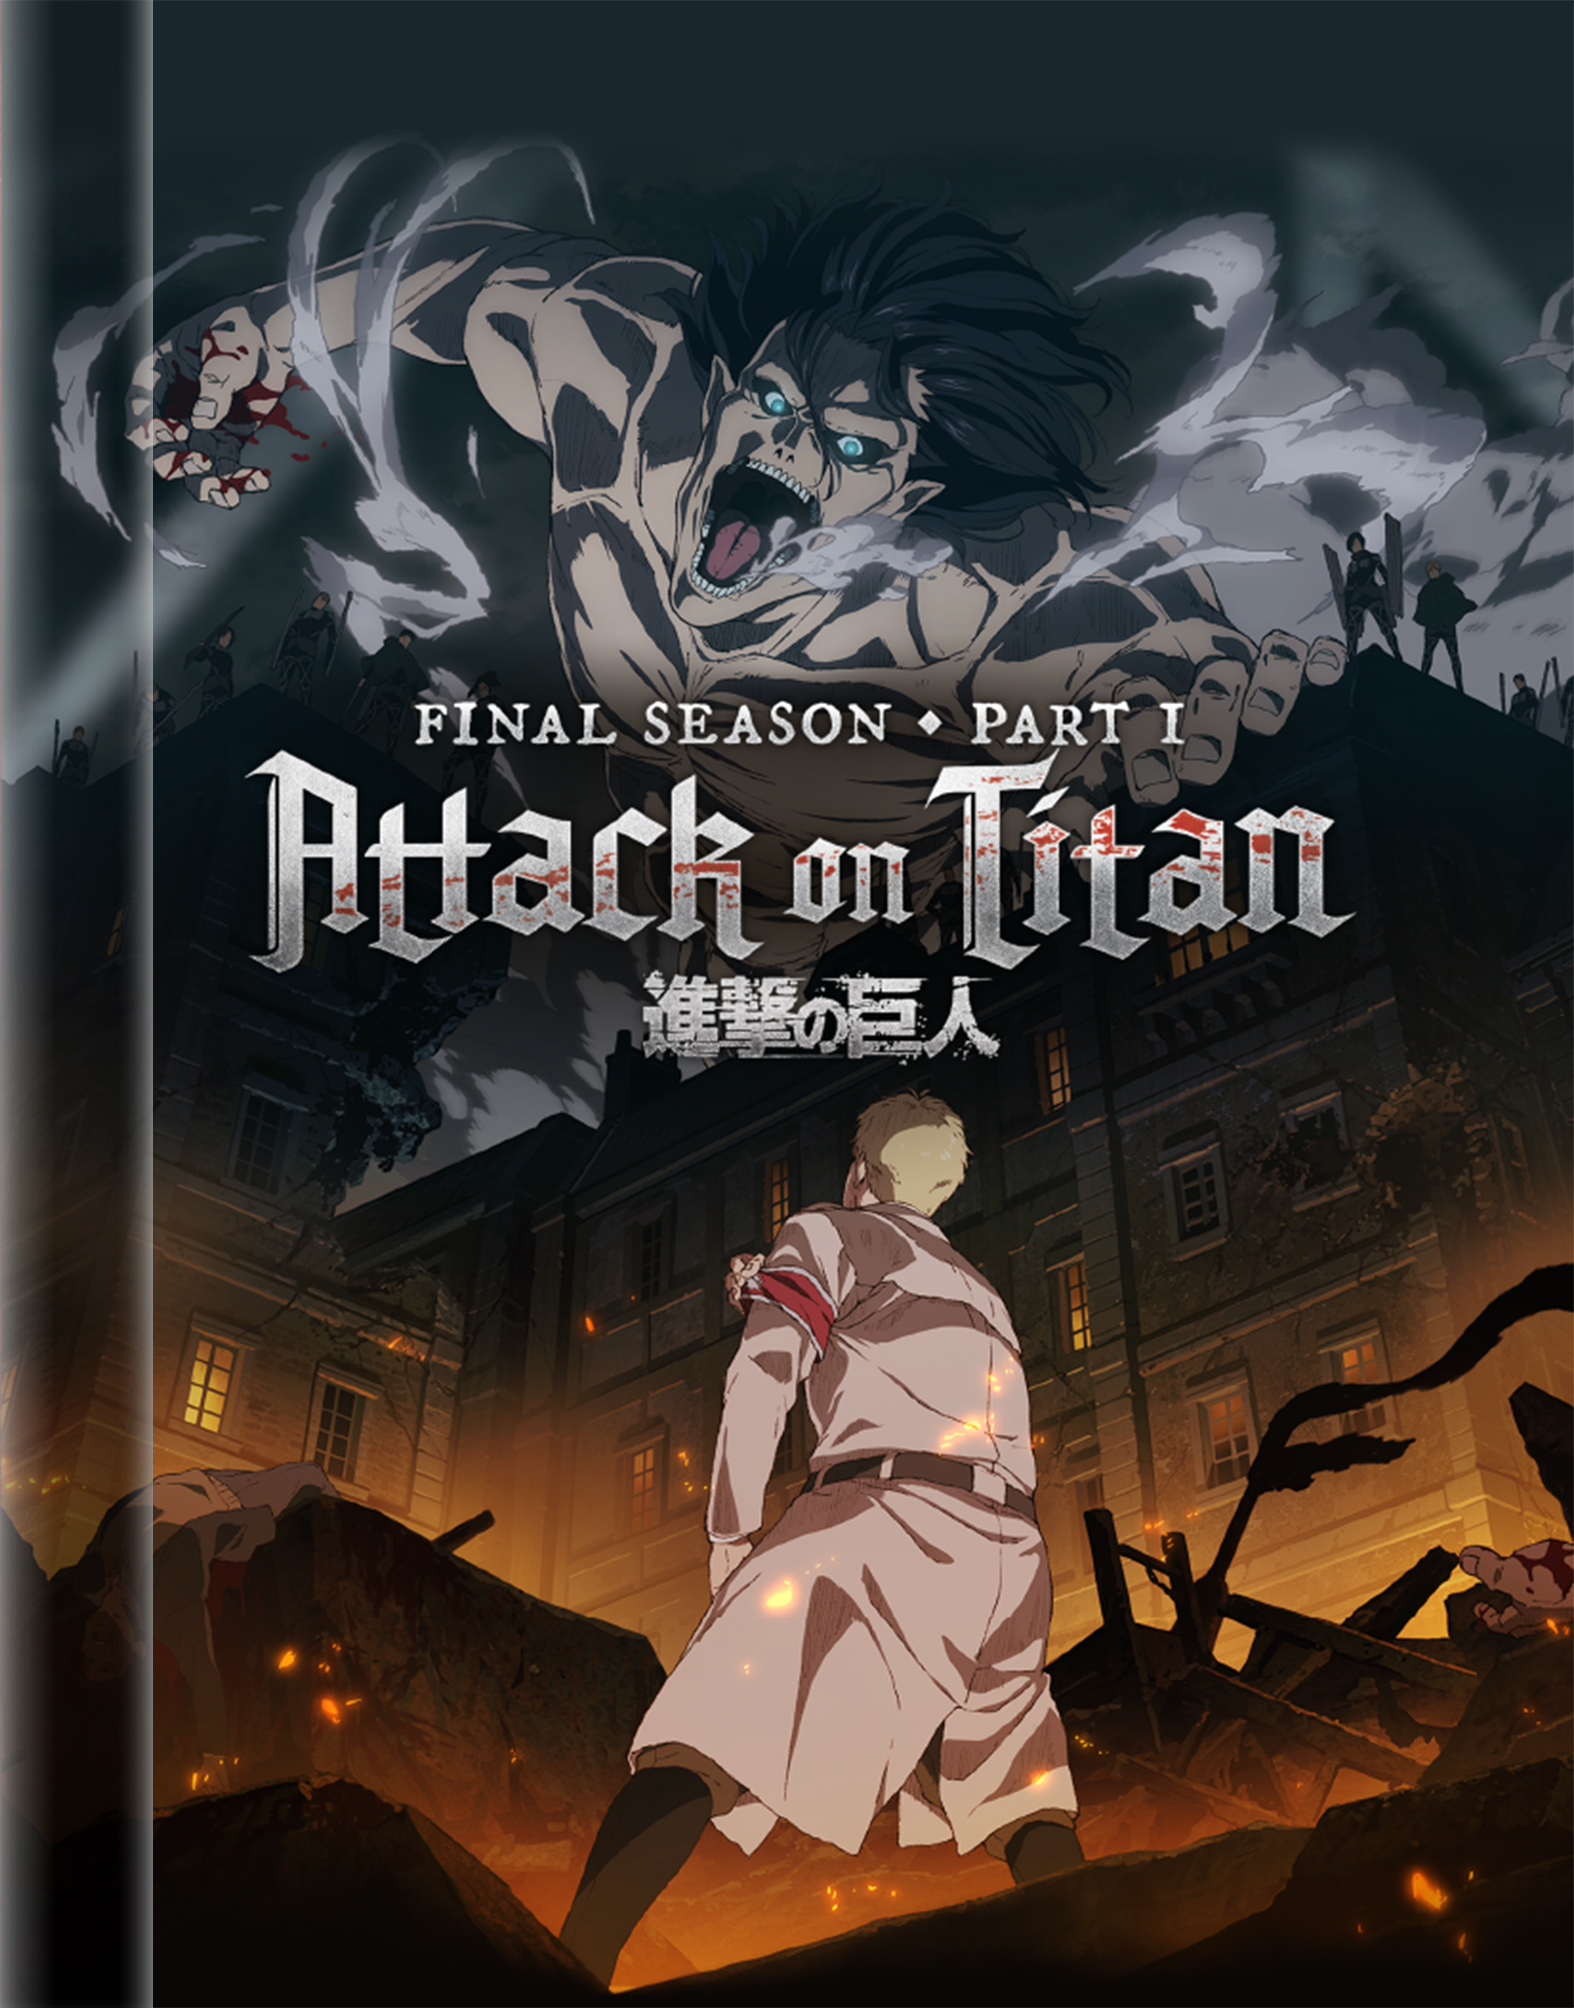 Attack on Titan Final Episode: Attack on Titan Final Episode: When